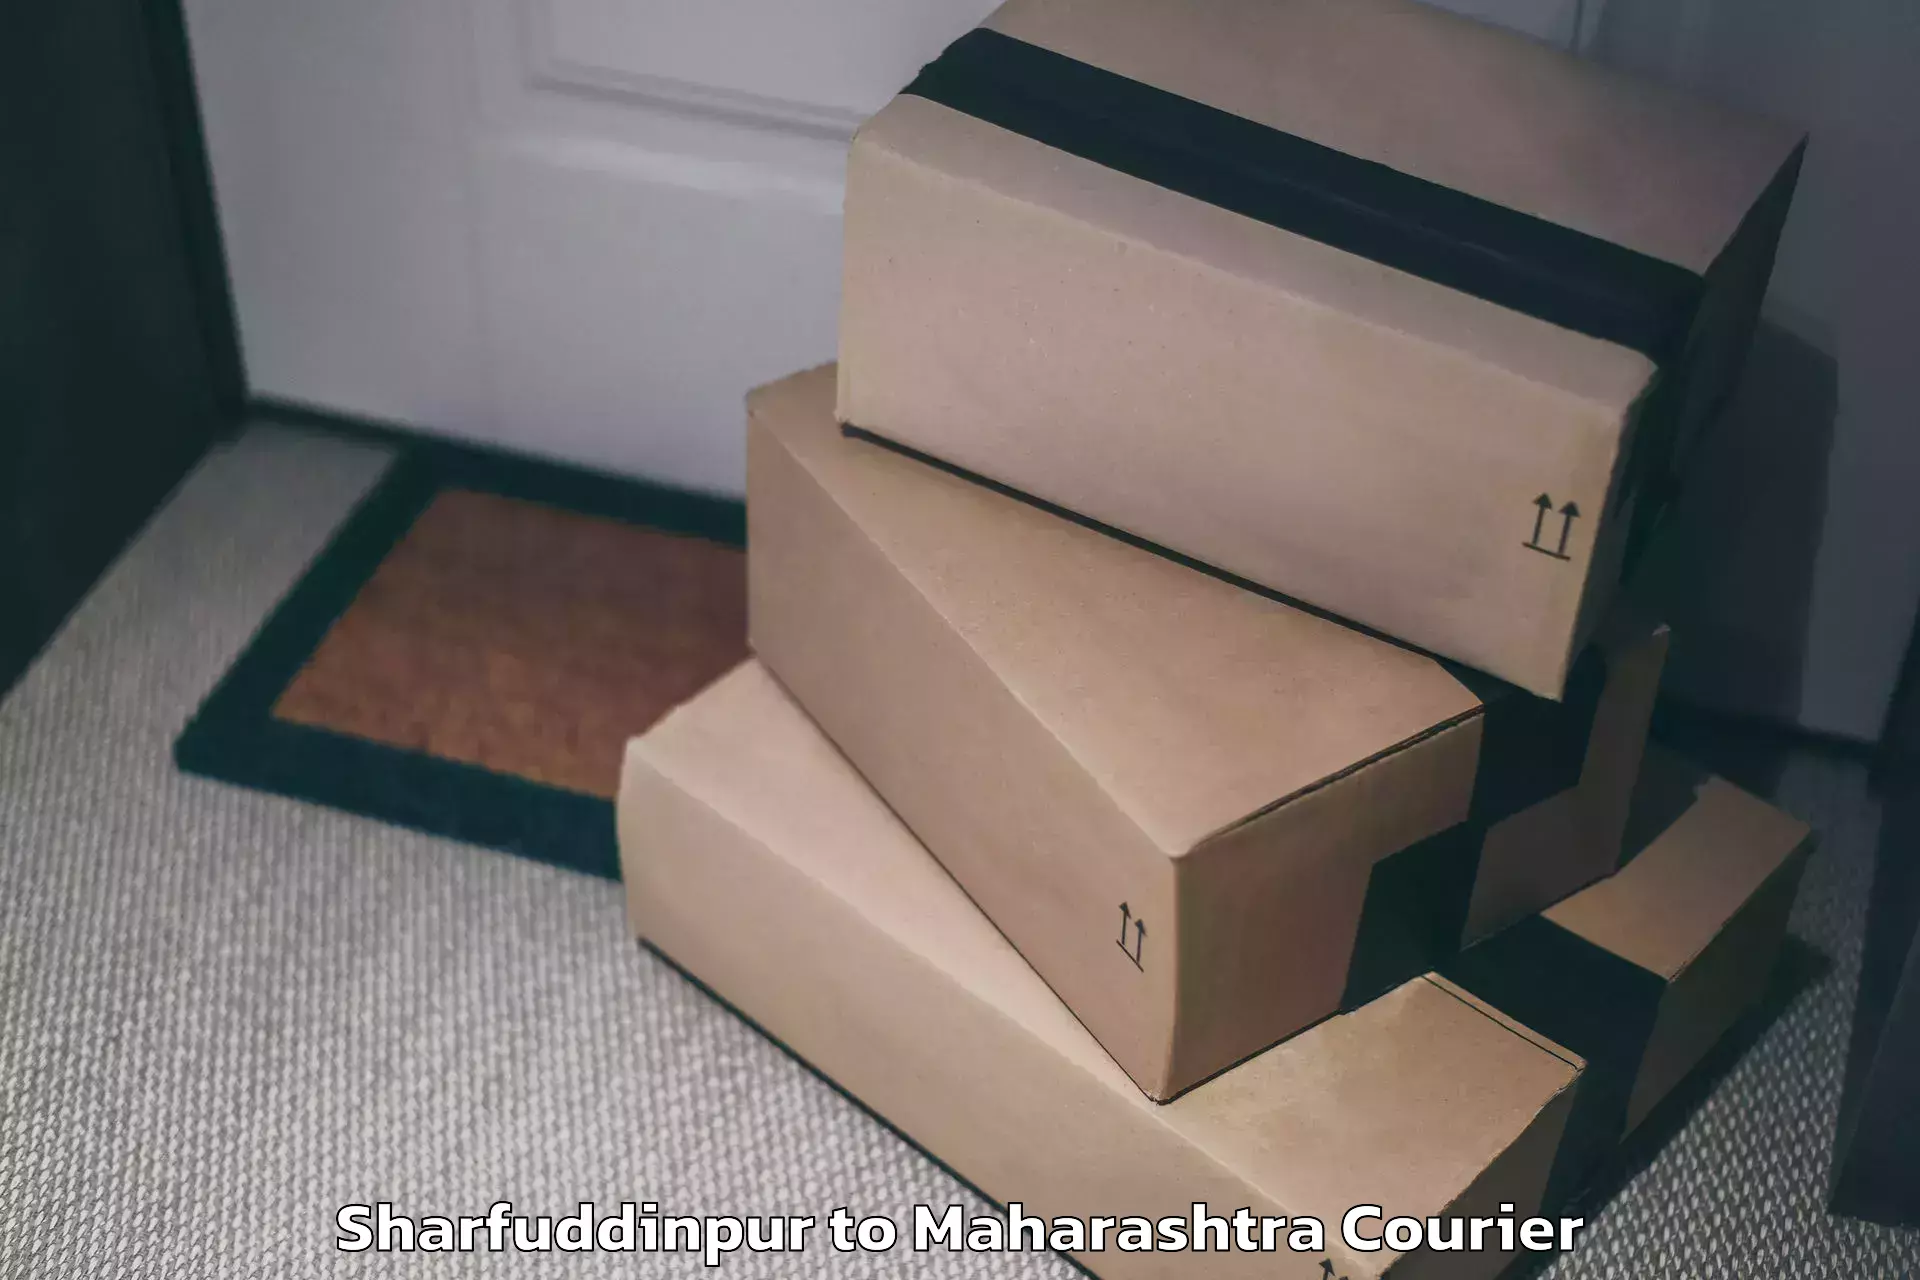 Urgent luggage shipment in Sharfuddinpur to Maharashtra